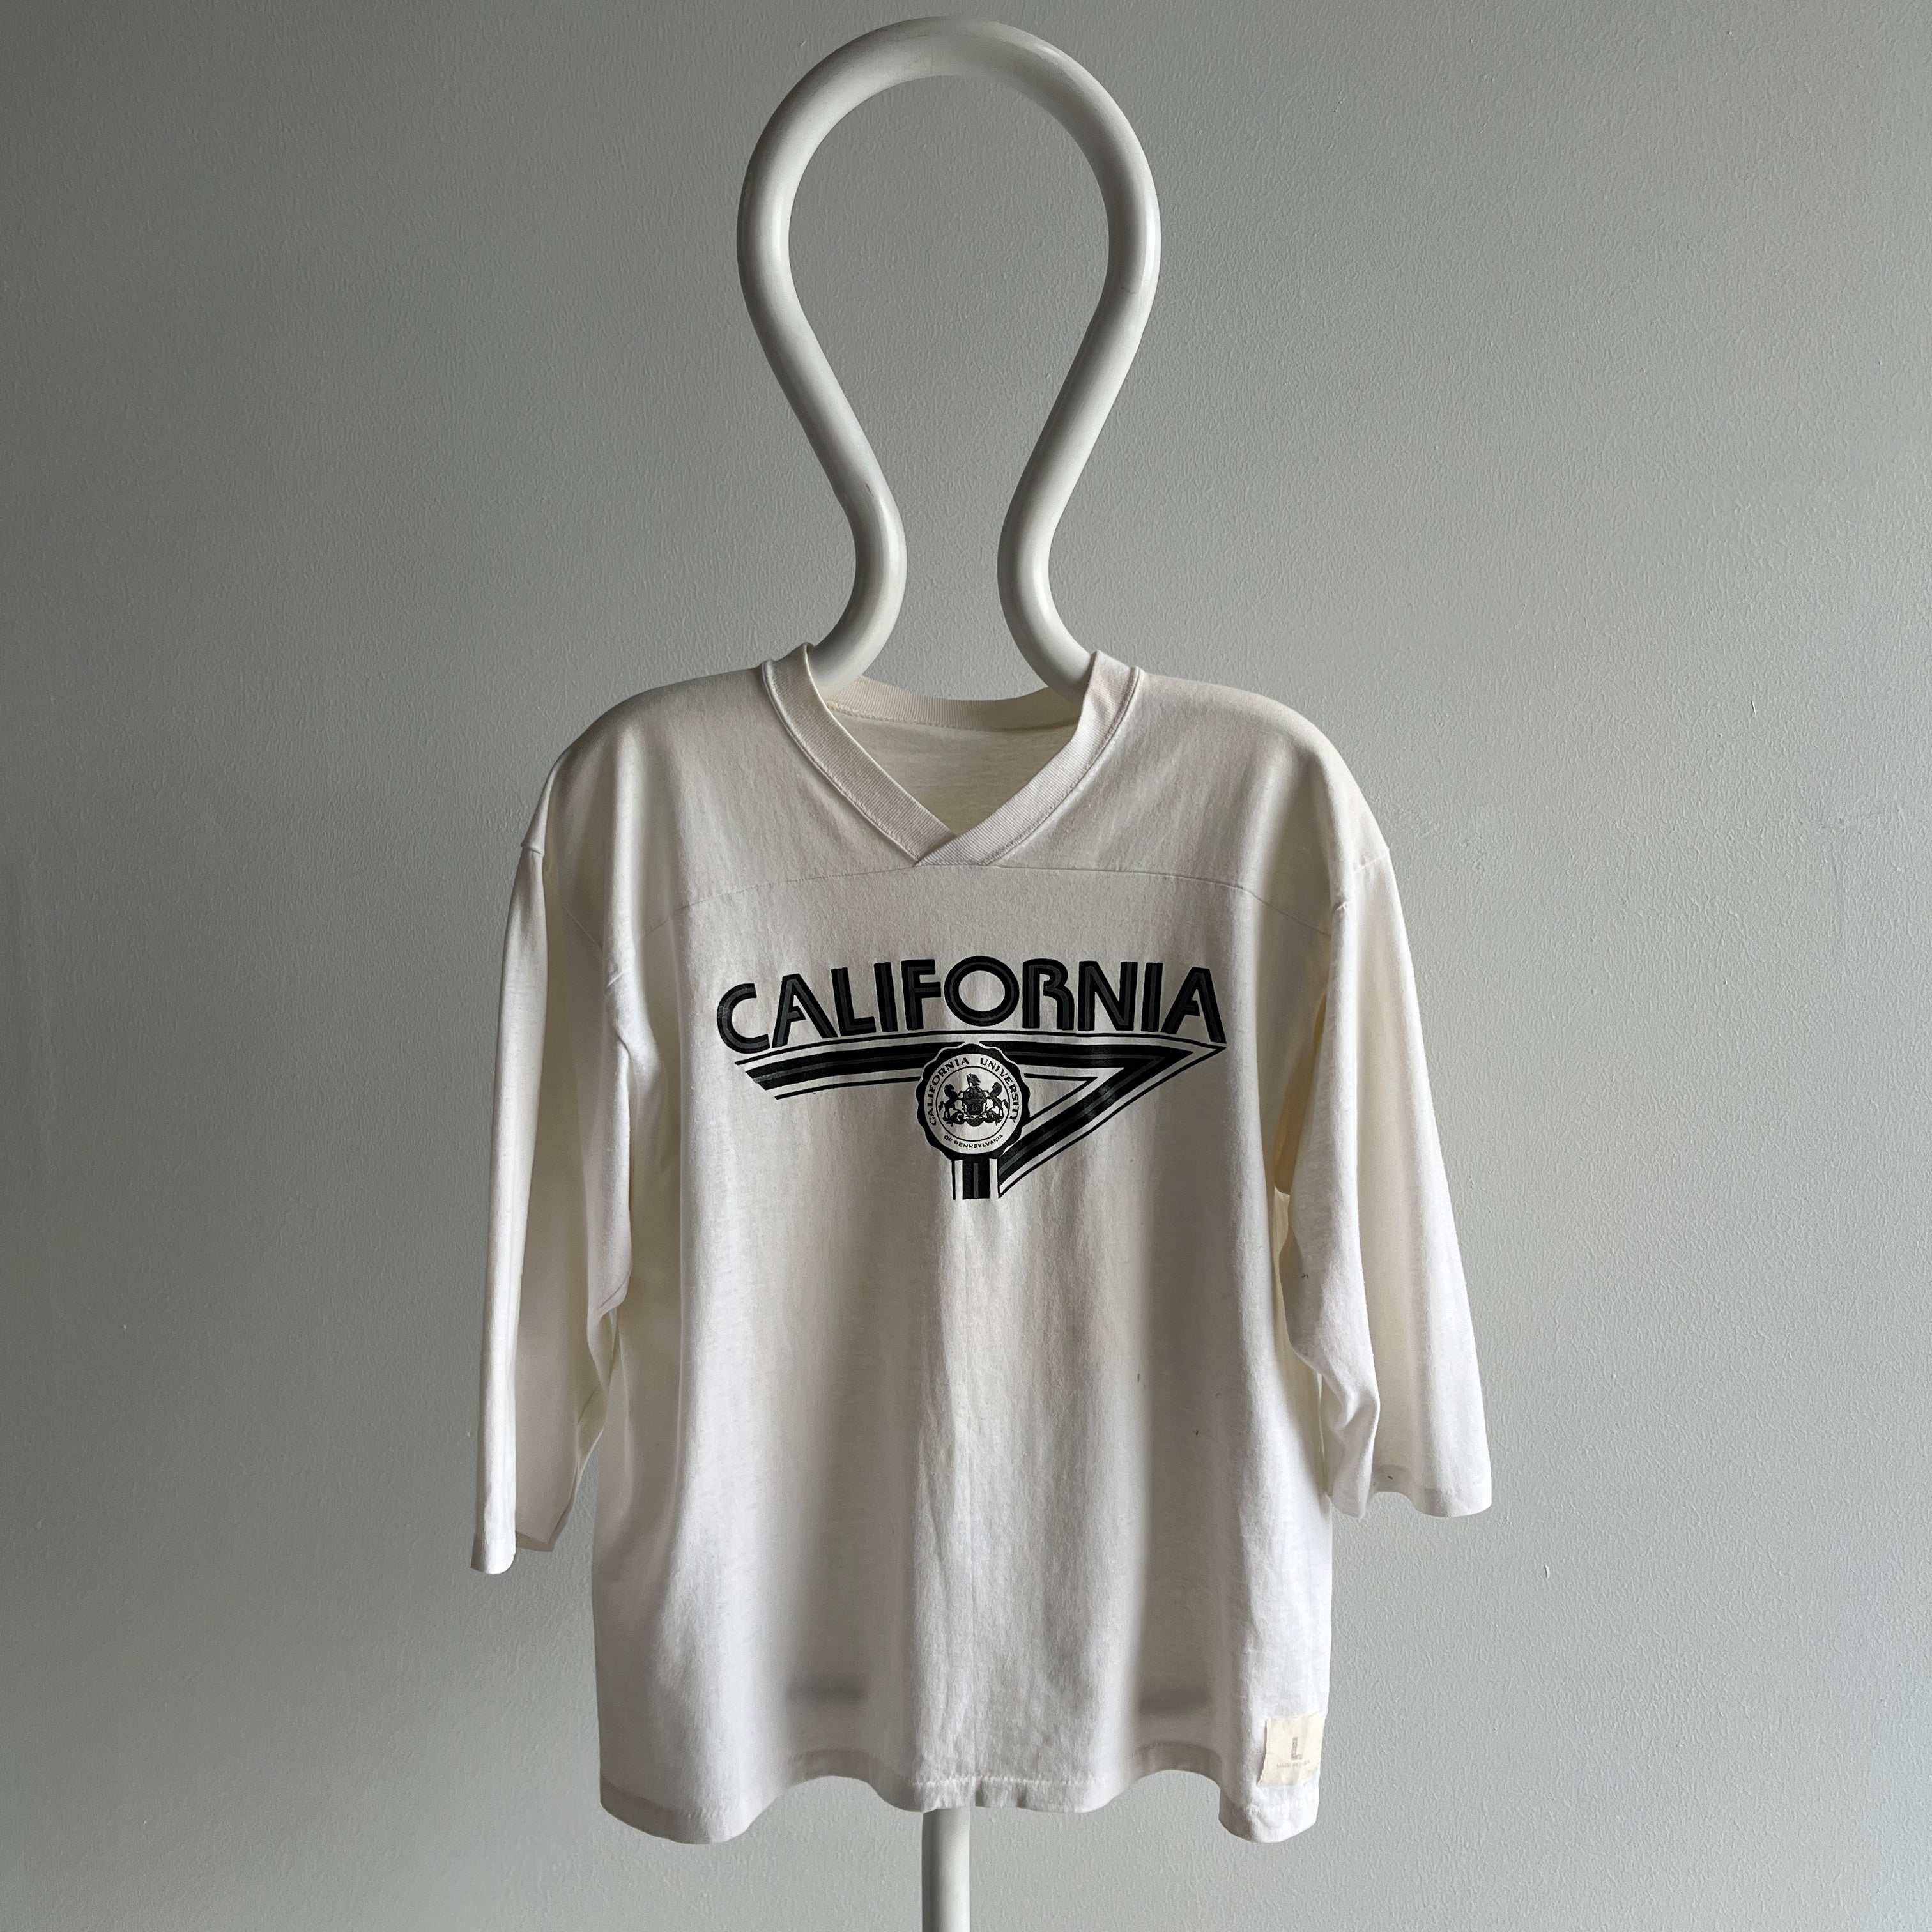 1970s California University of Pennsylvania Football Shirt